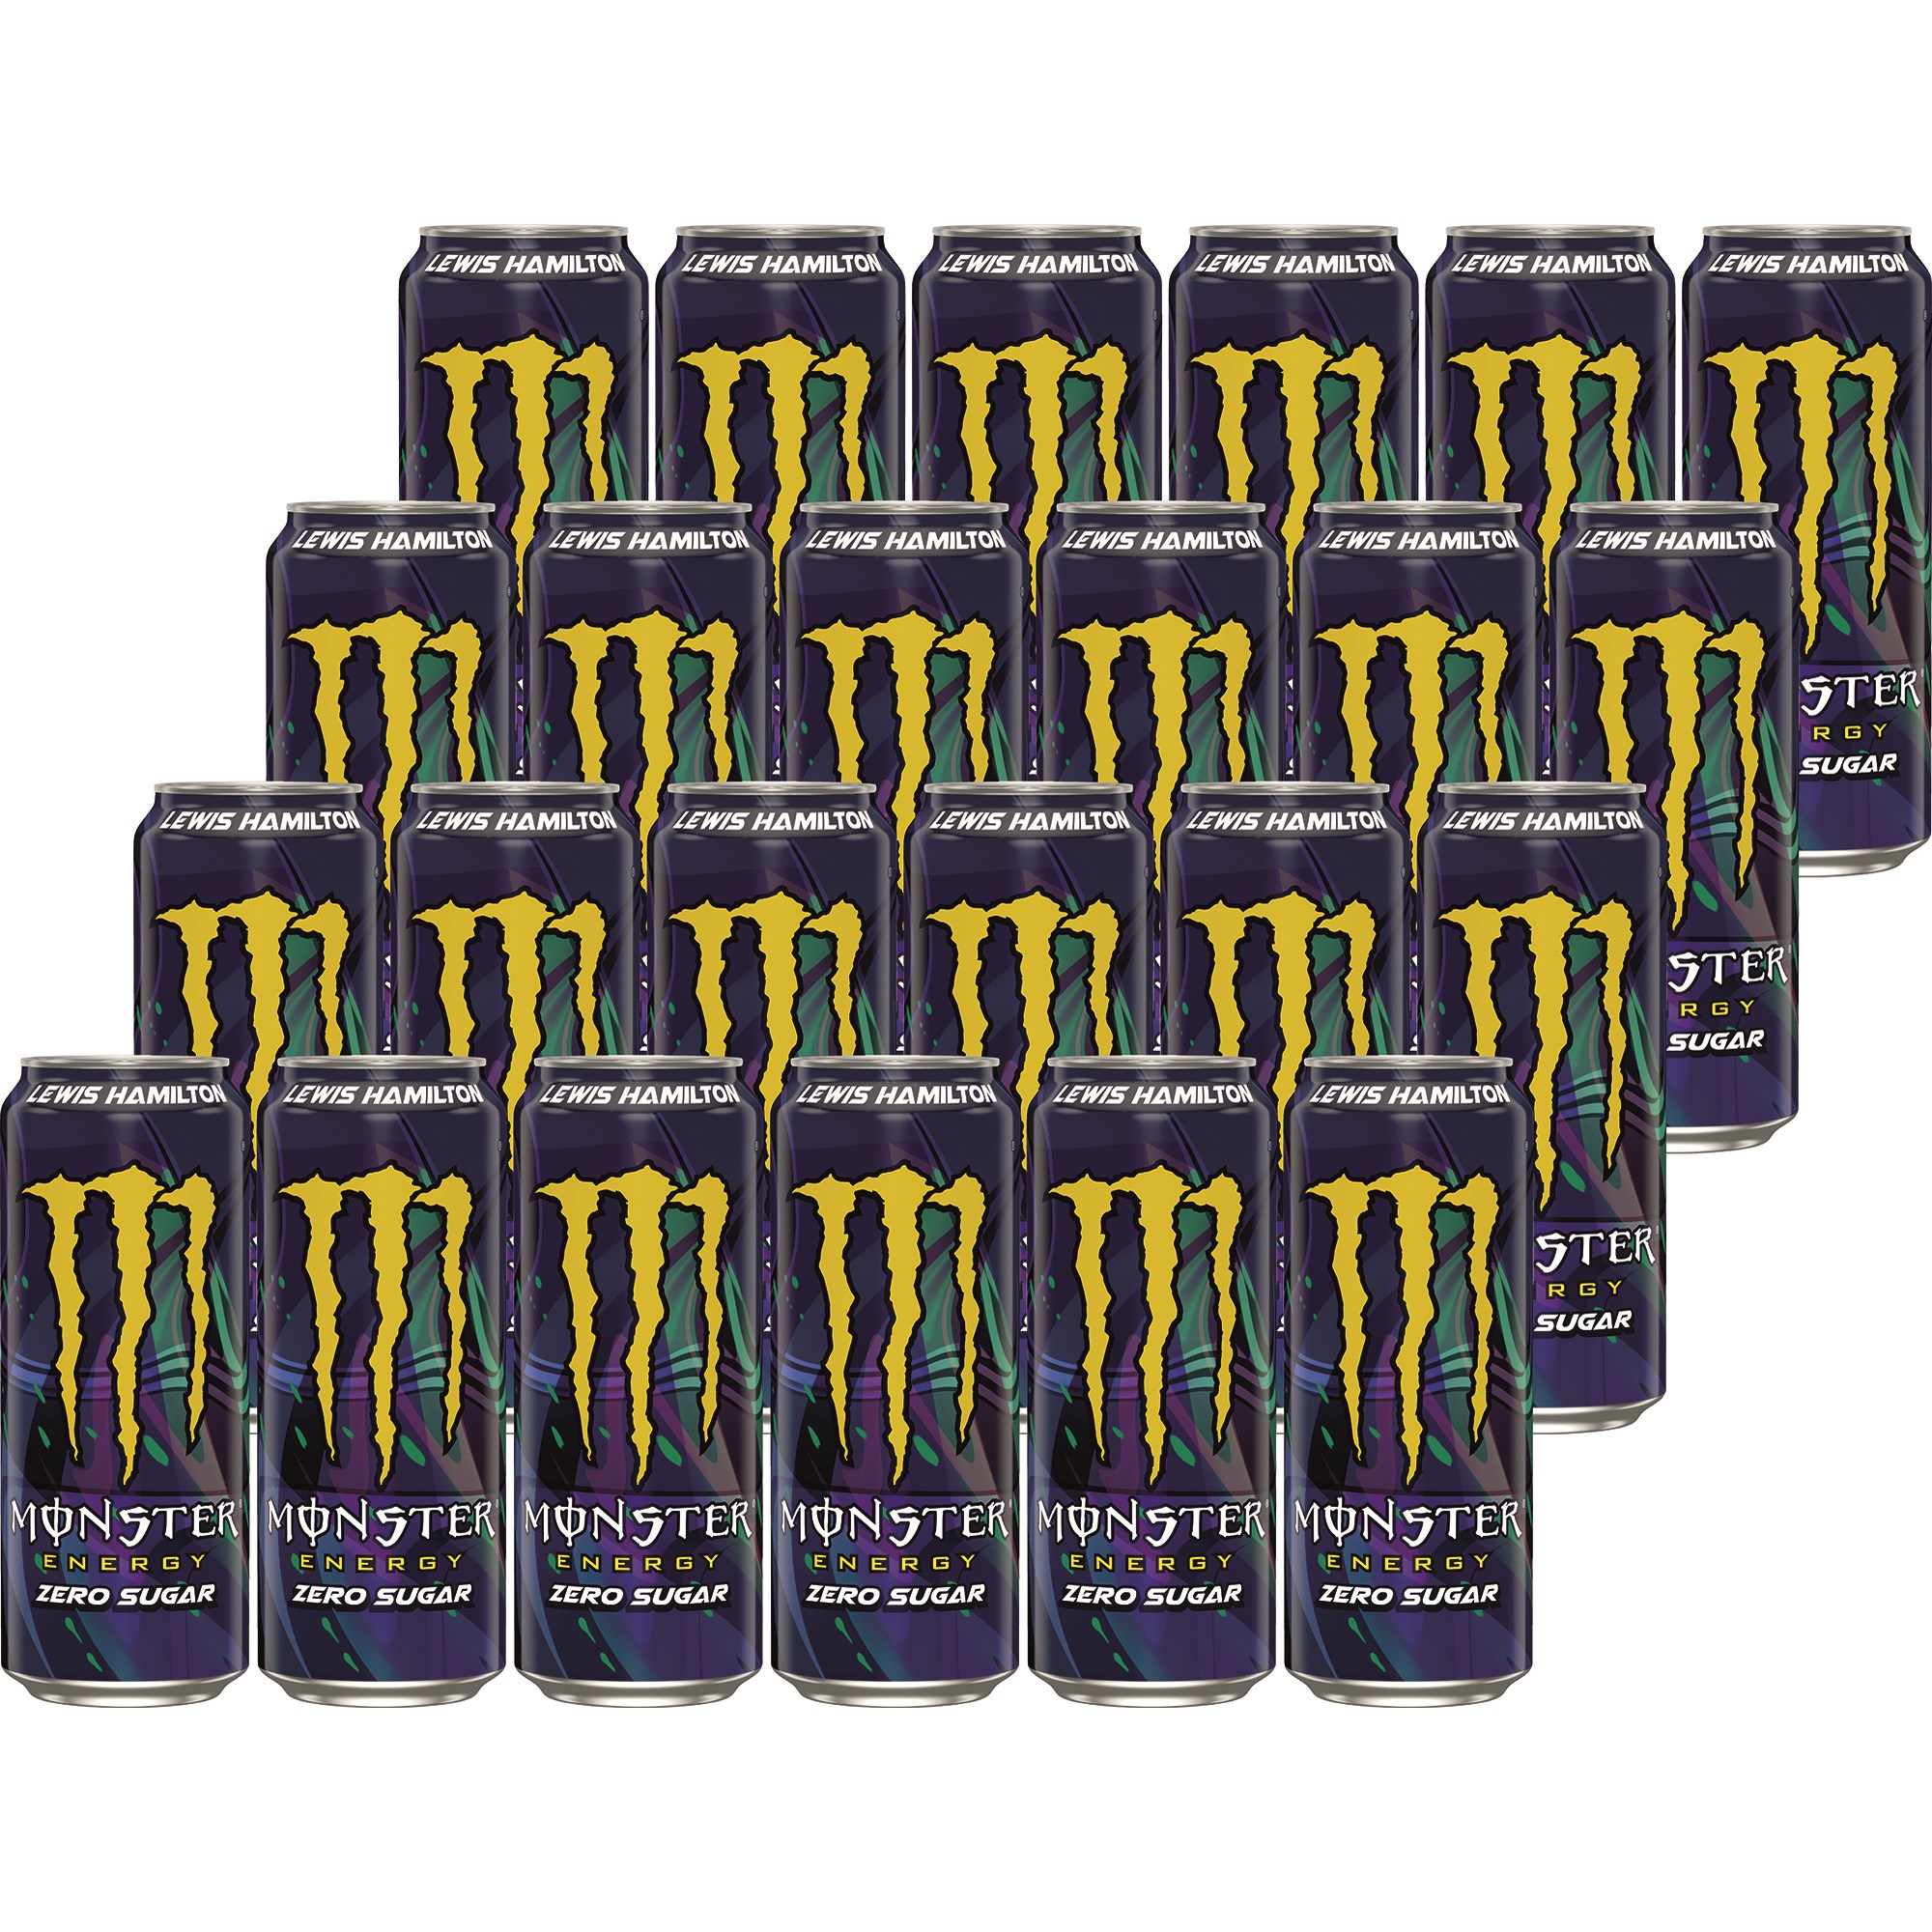 Monster Energy Lewis Hamilton Zero Sugar 24 x 50cl